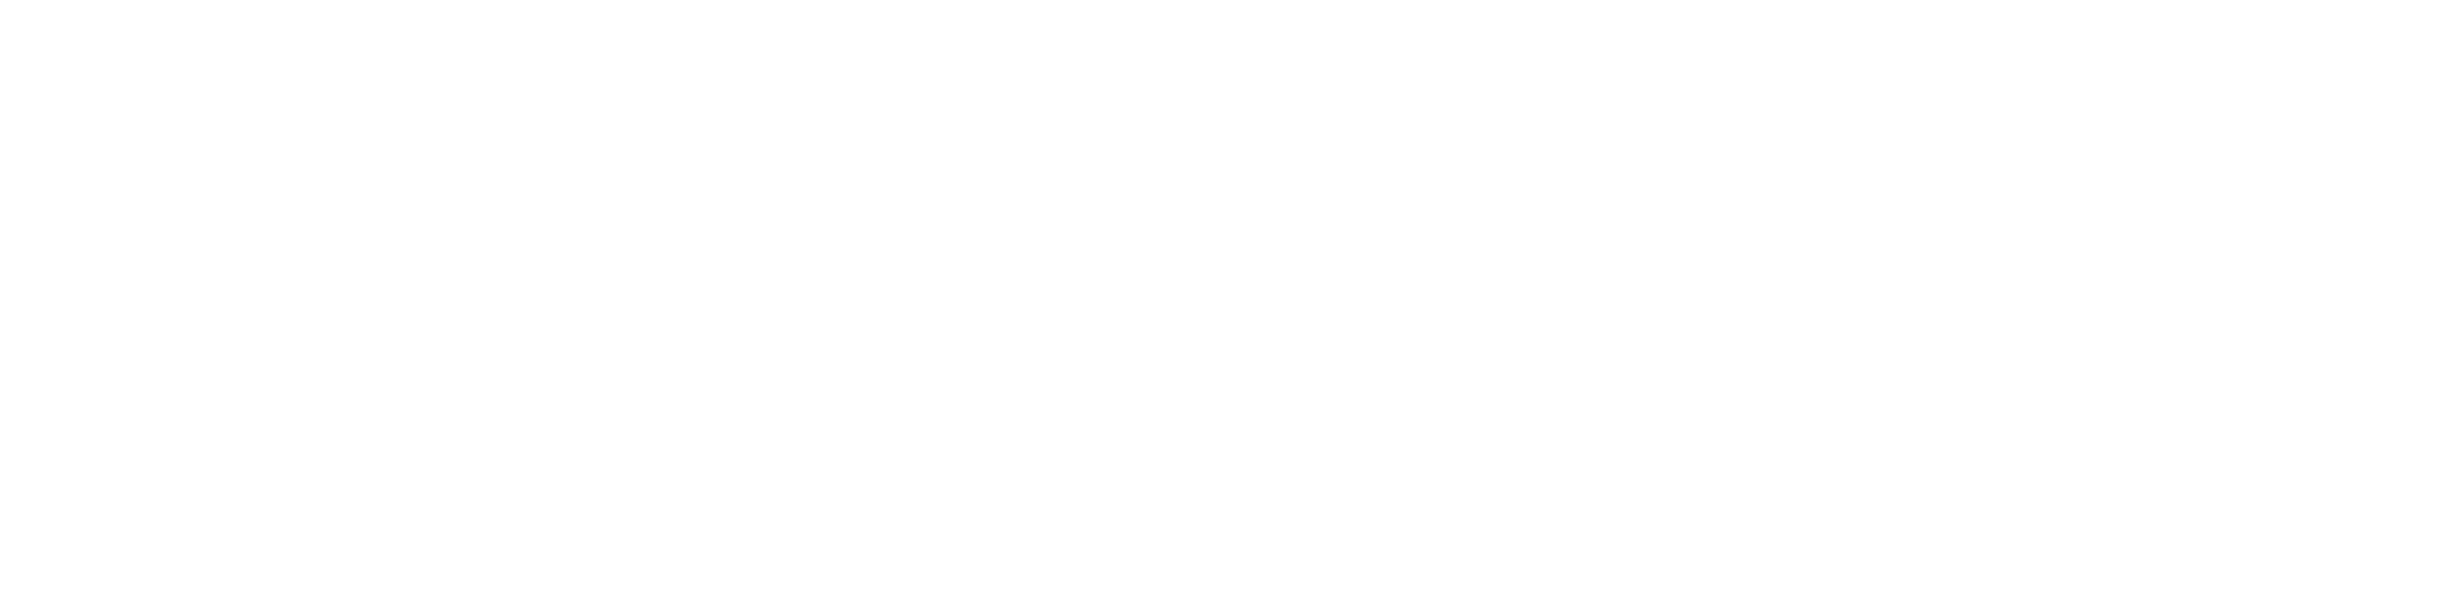 KIA svc logo